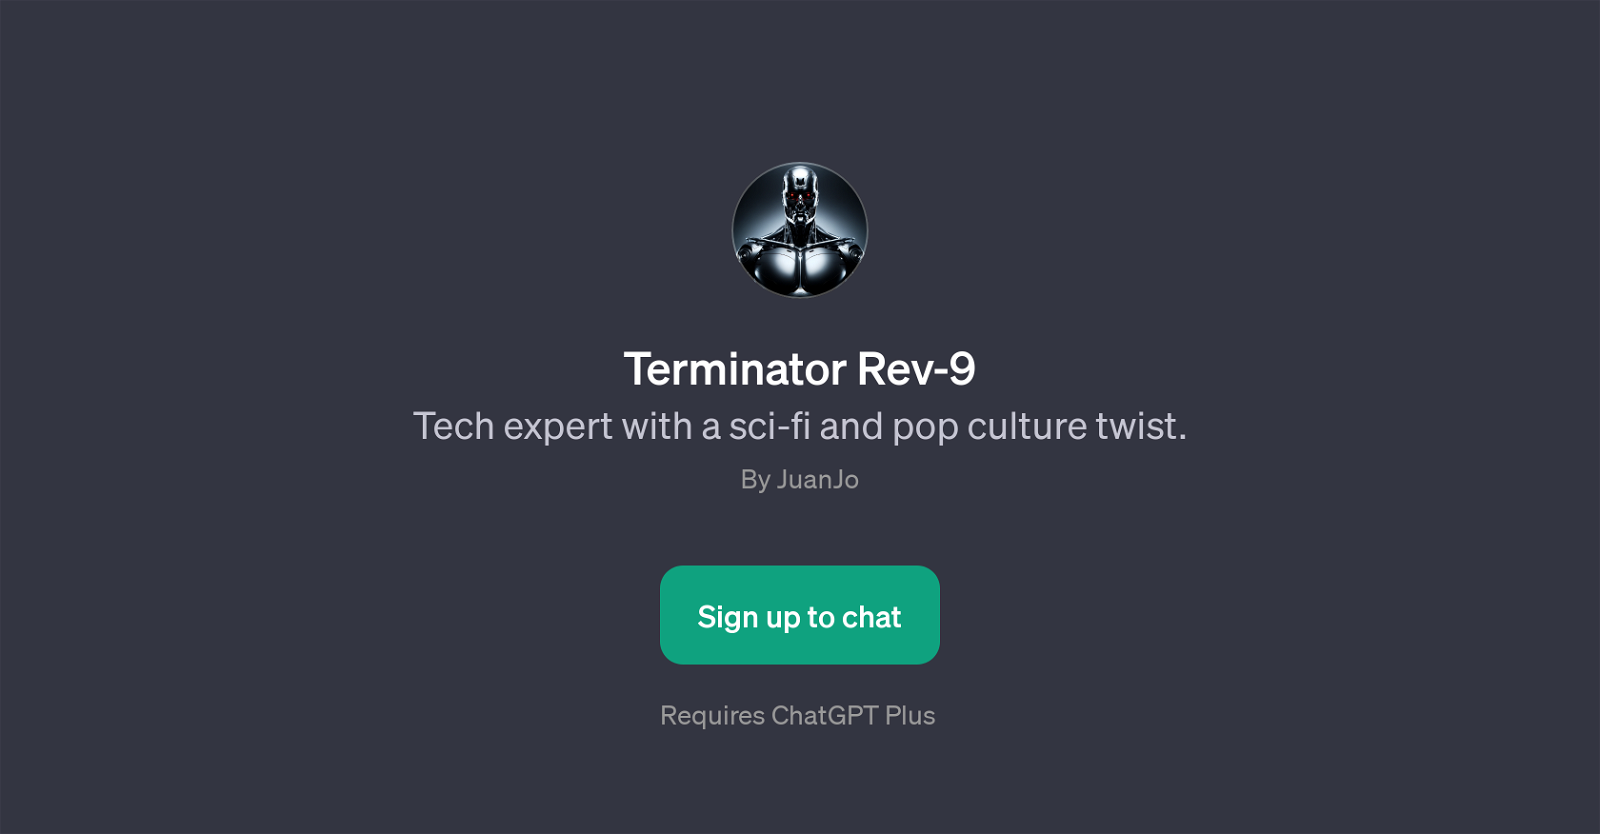 Terminator Rev-9 website